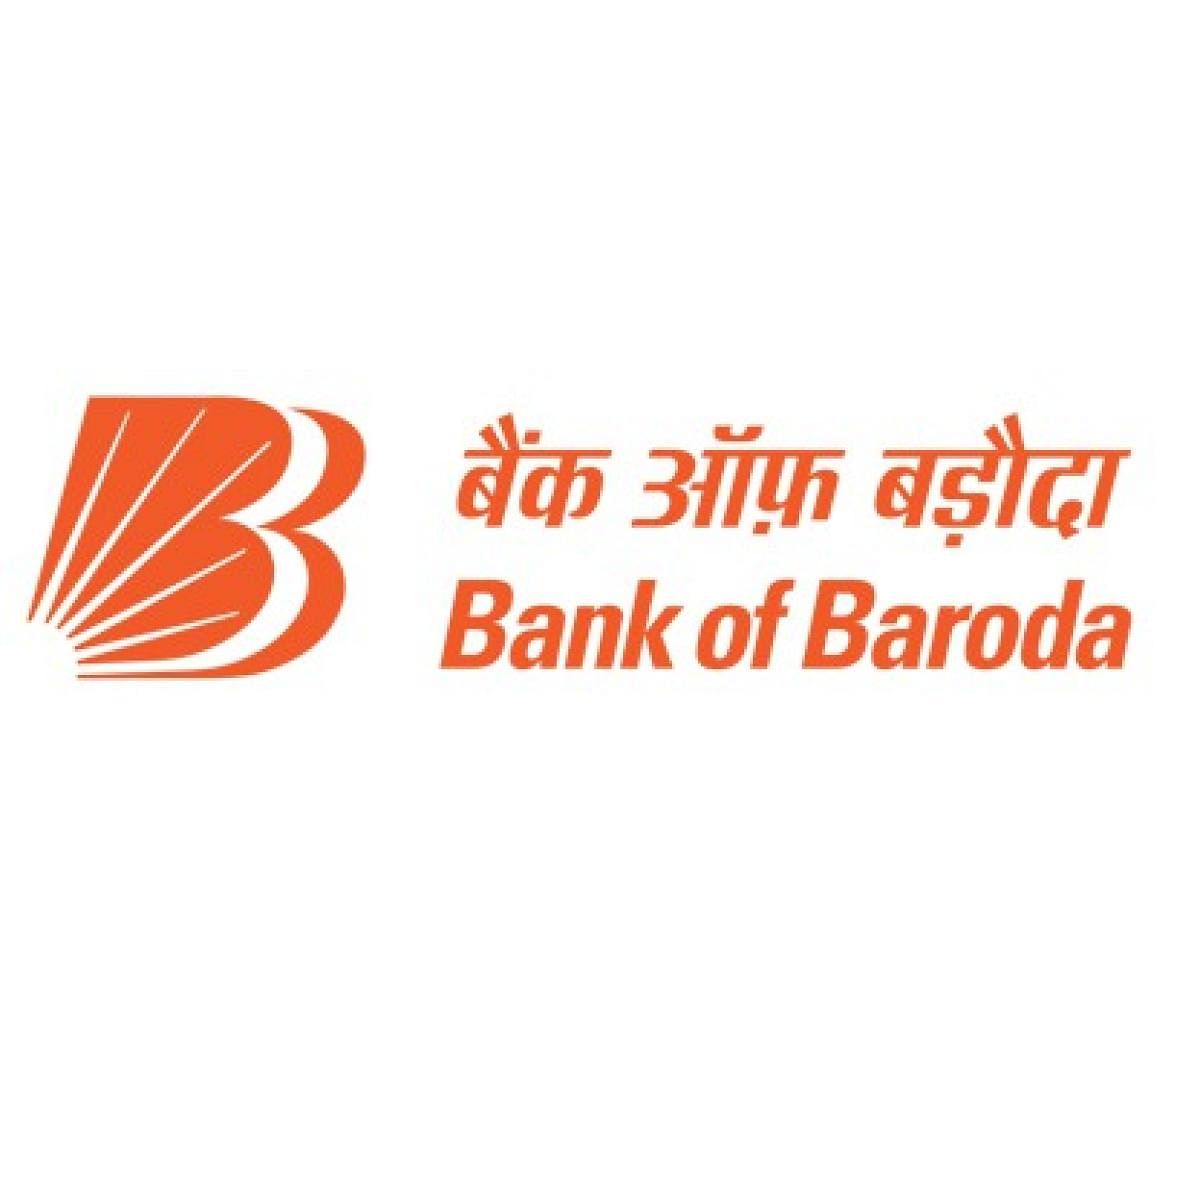 File Photo: Bank of Baroda logo